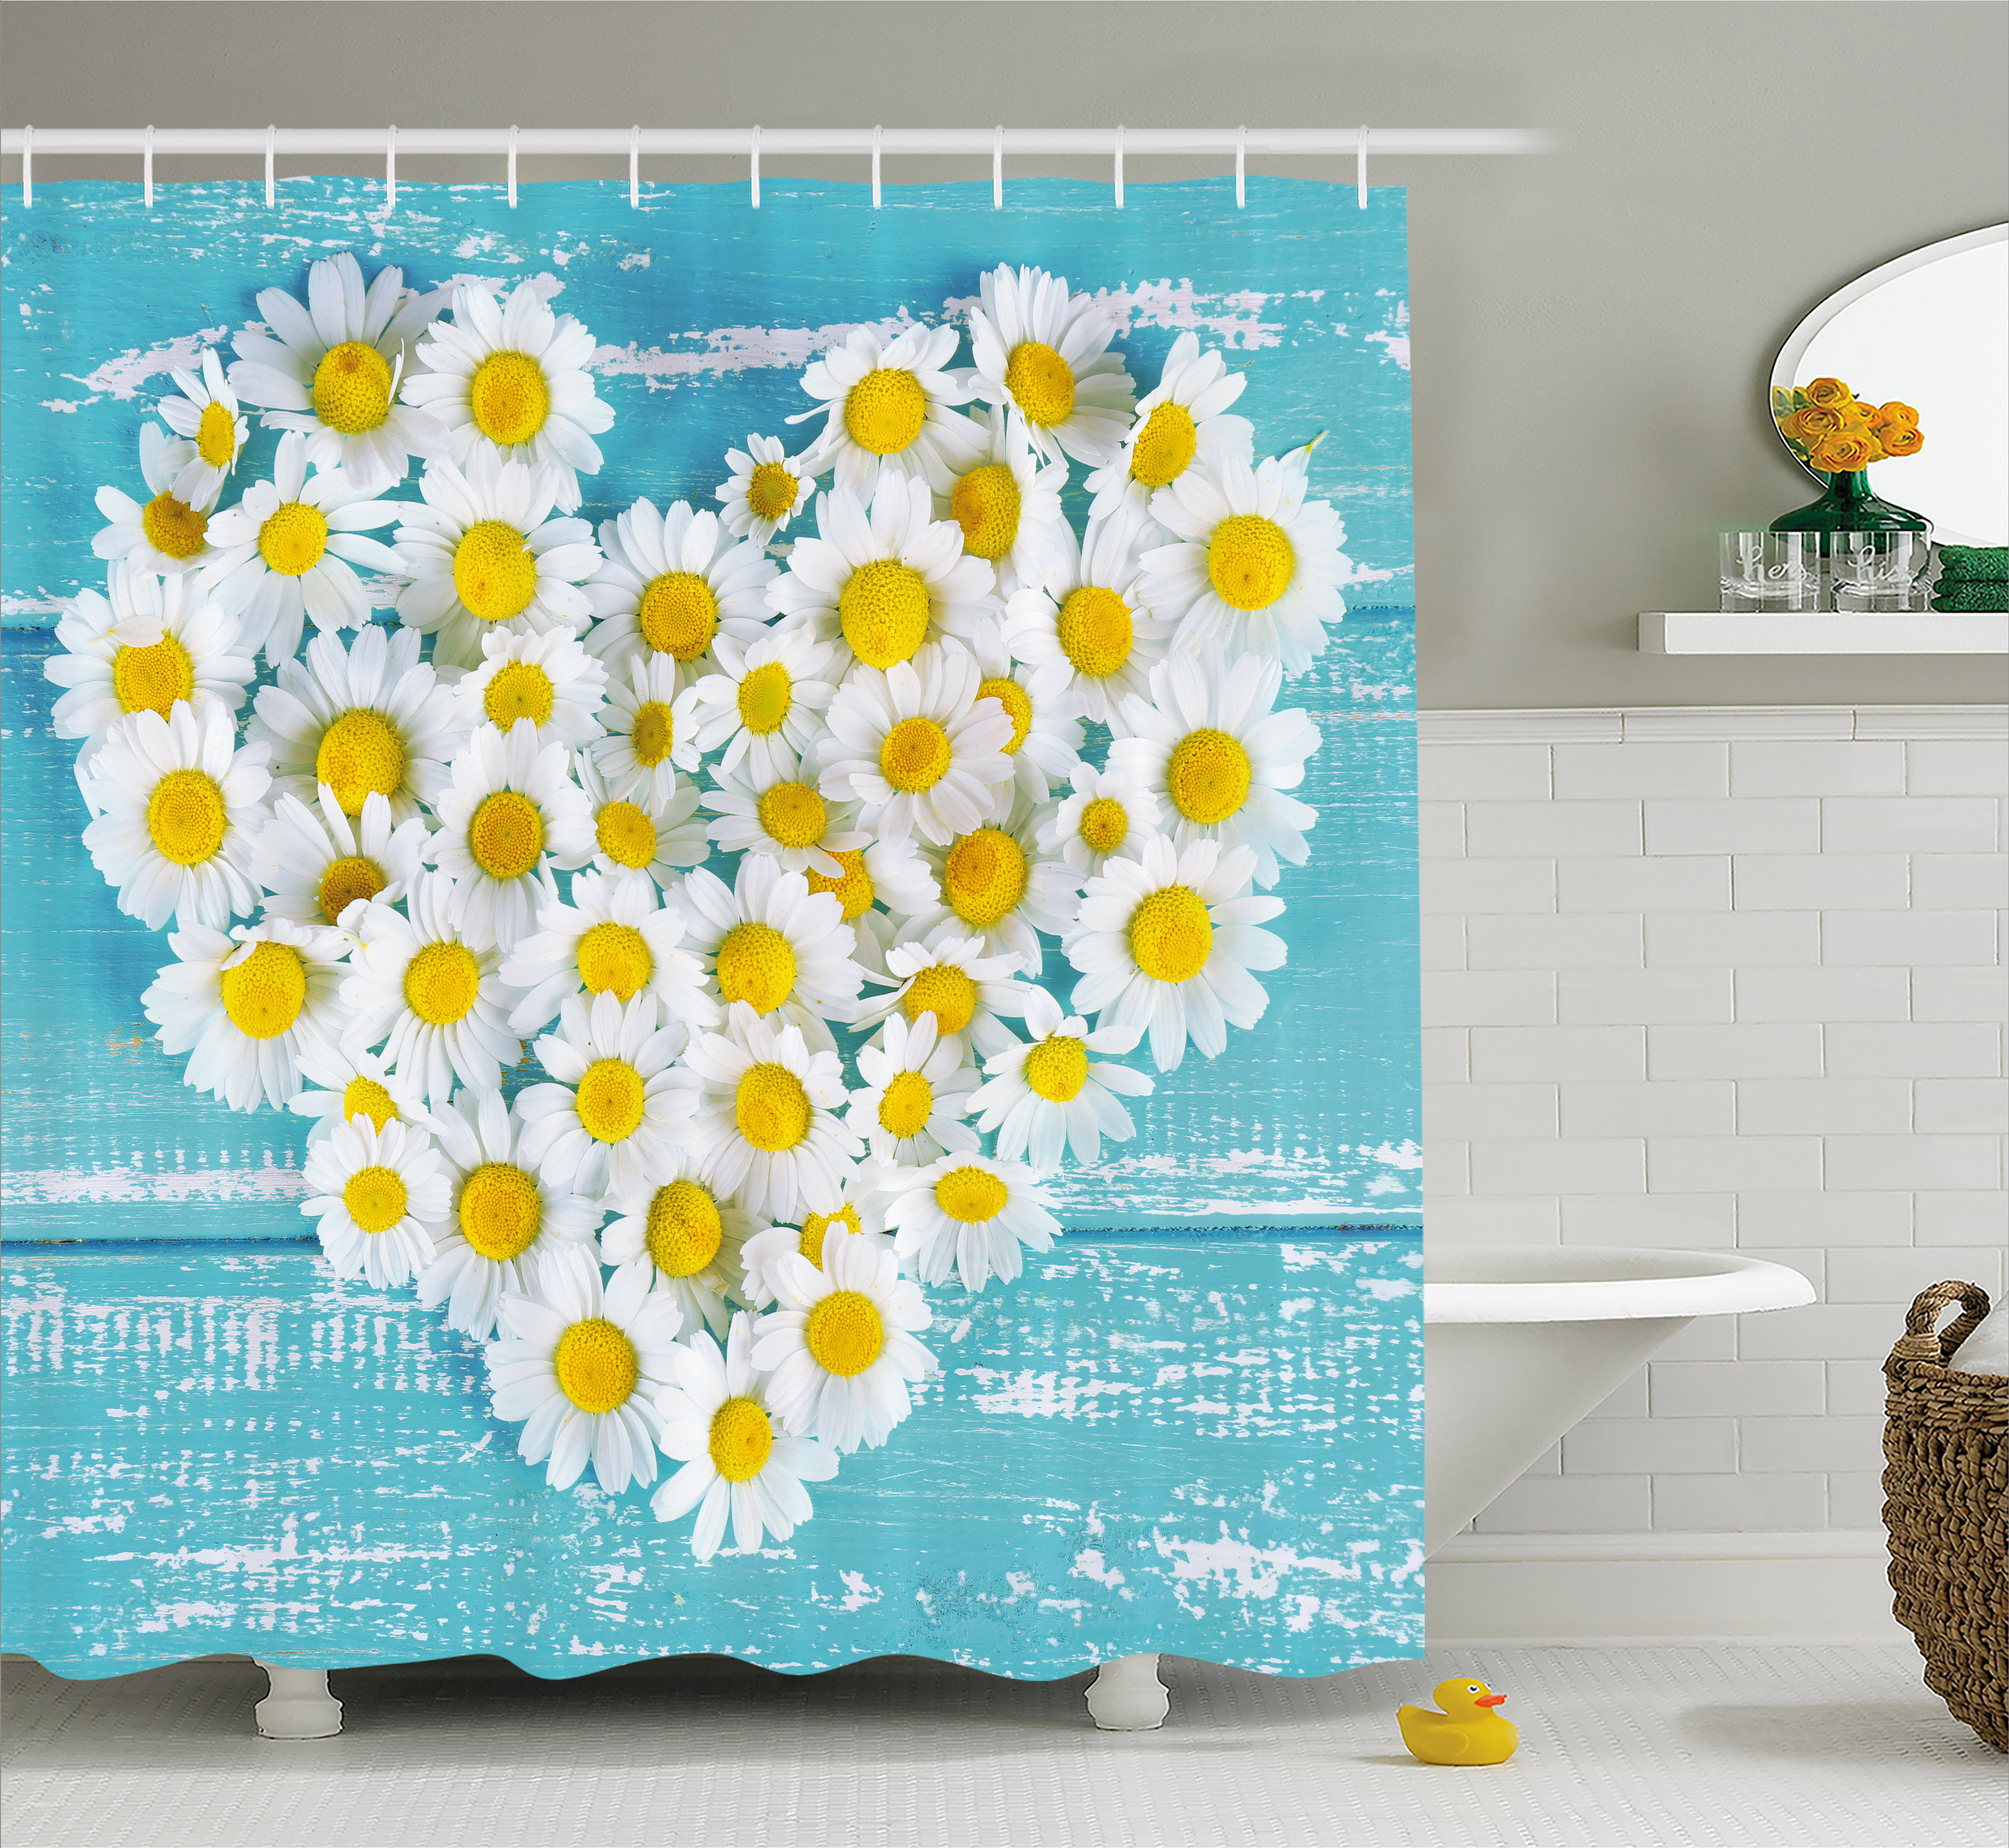 Shower Curtain, Heart Shaped Daisy Flowers